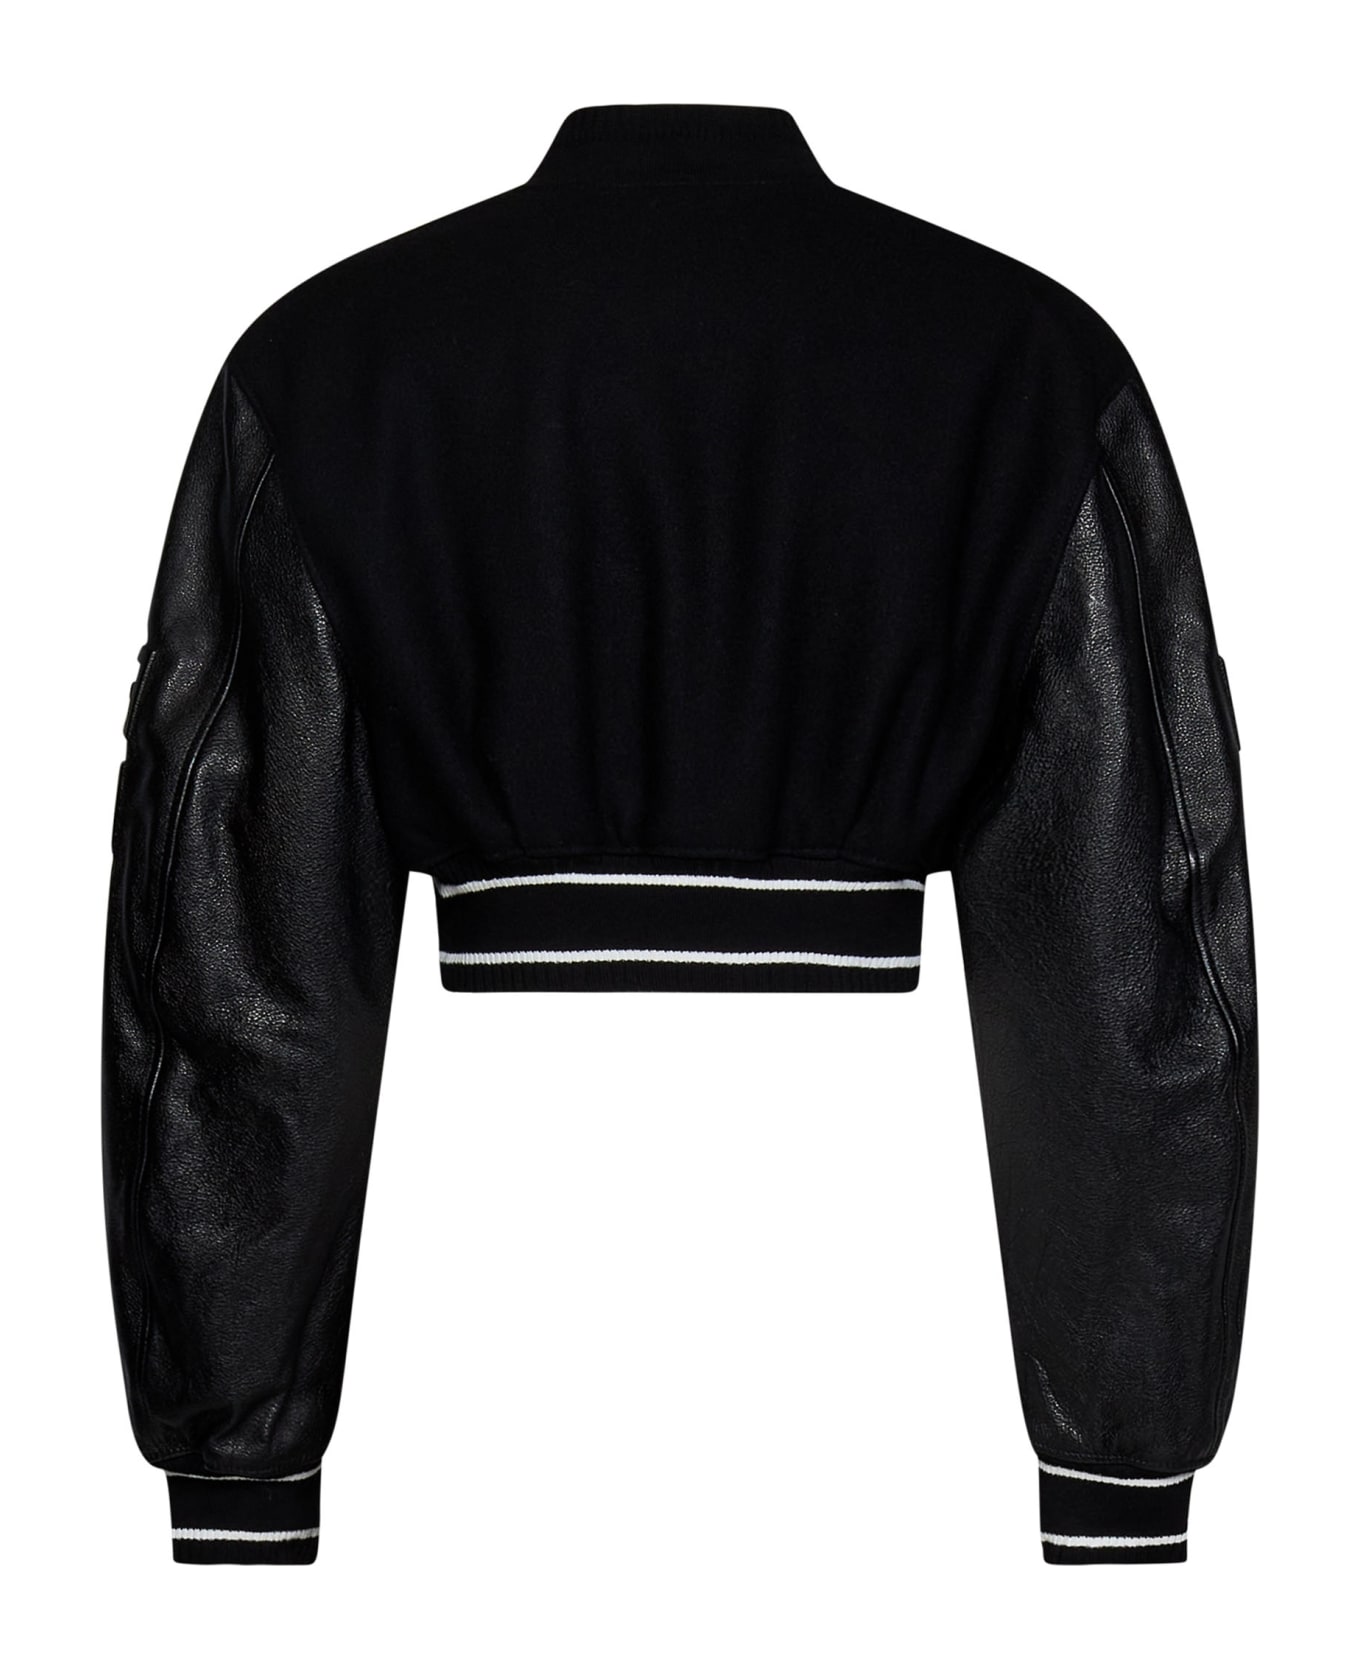 Givenchy Wool Blend Jacket - Black ジャケット